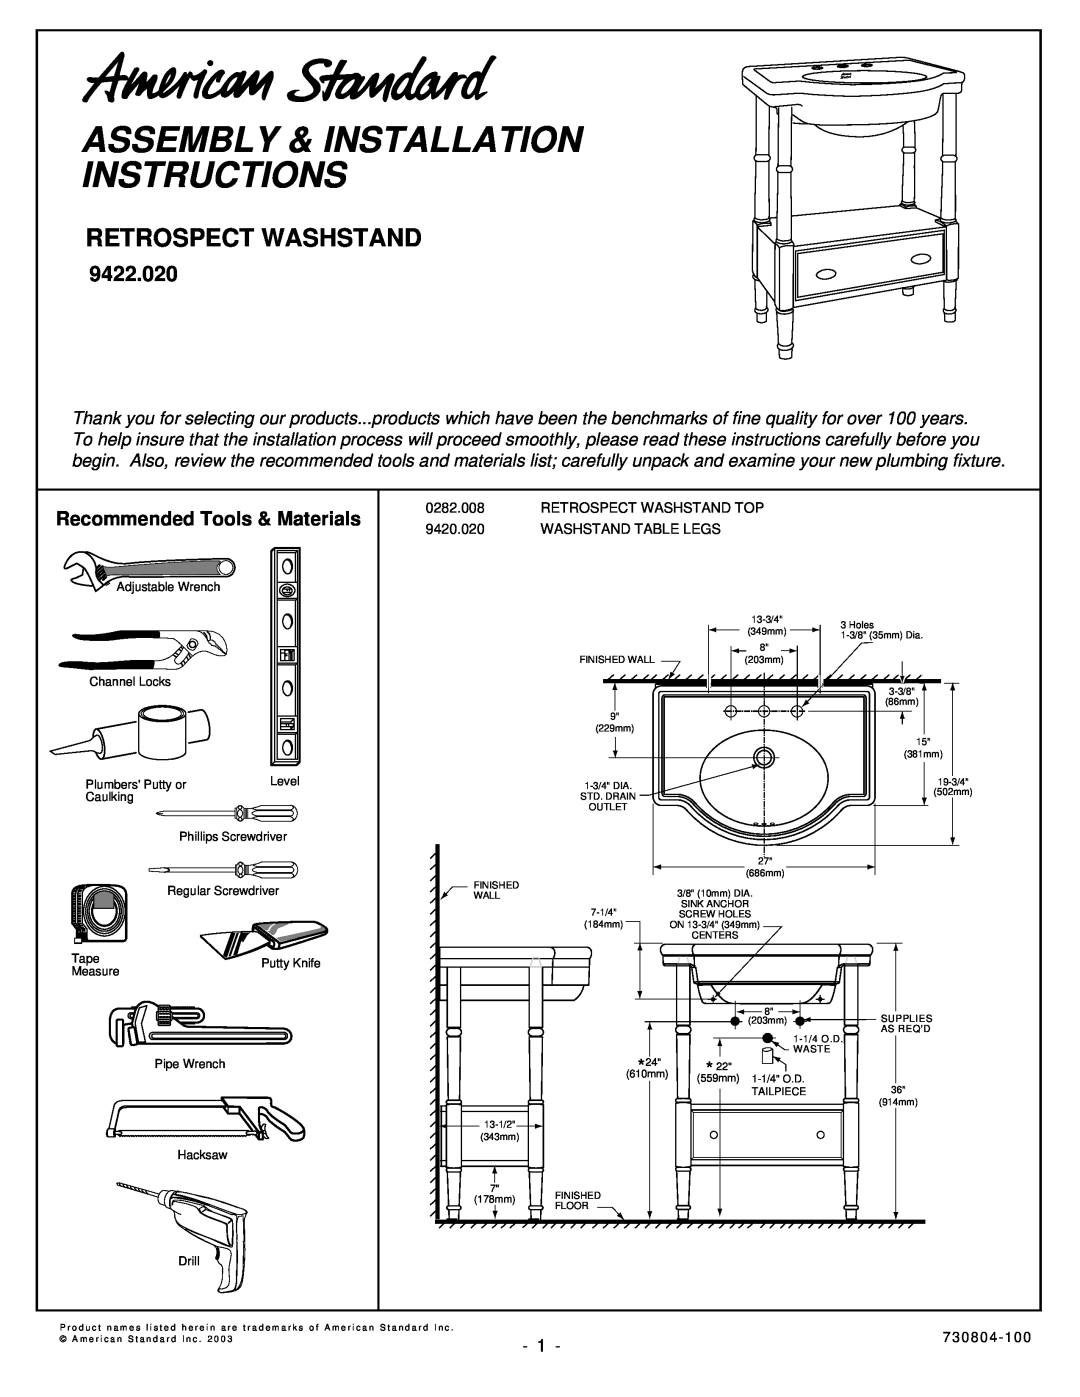 American Standard 9422.020 installation instructions Retrospect Washstand, Assembly & Installation Instructions 